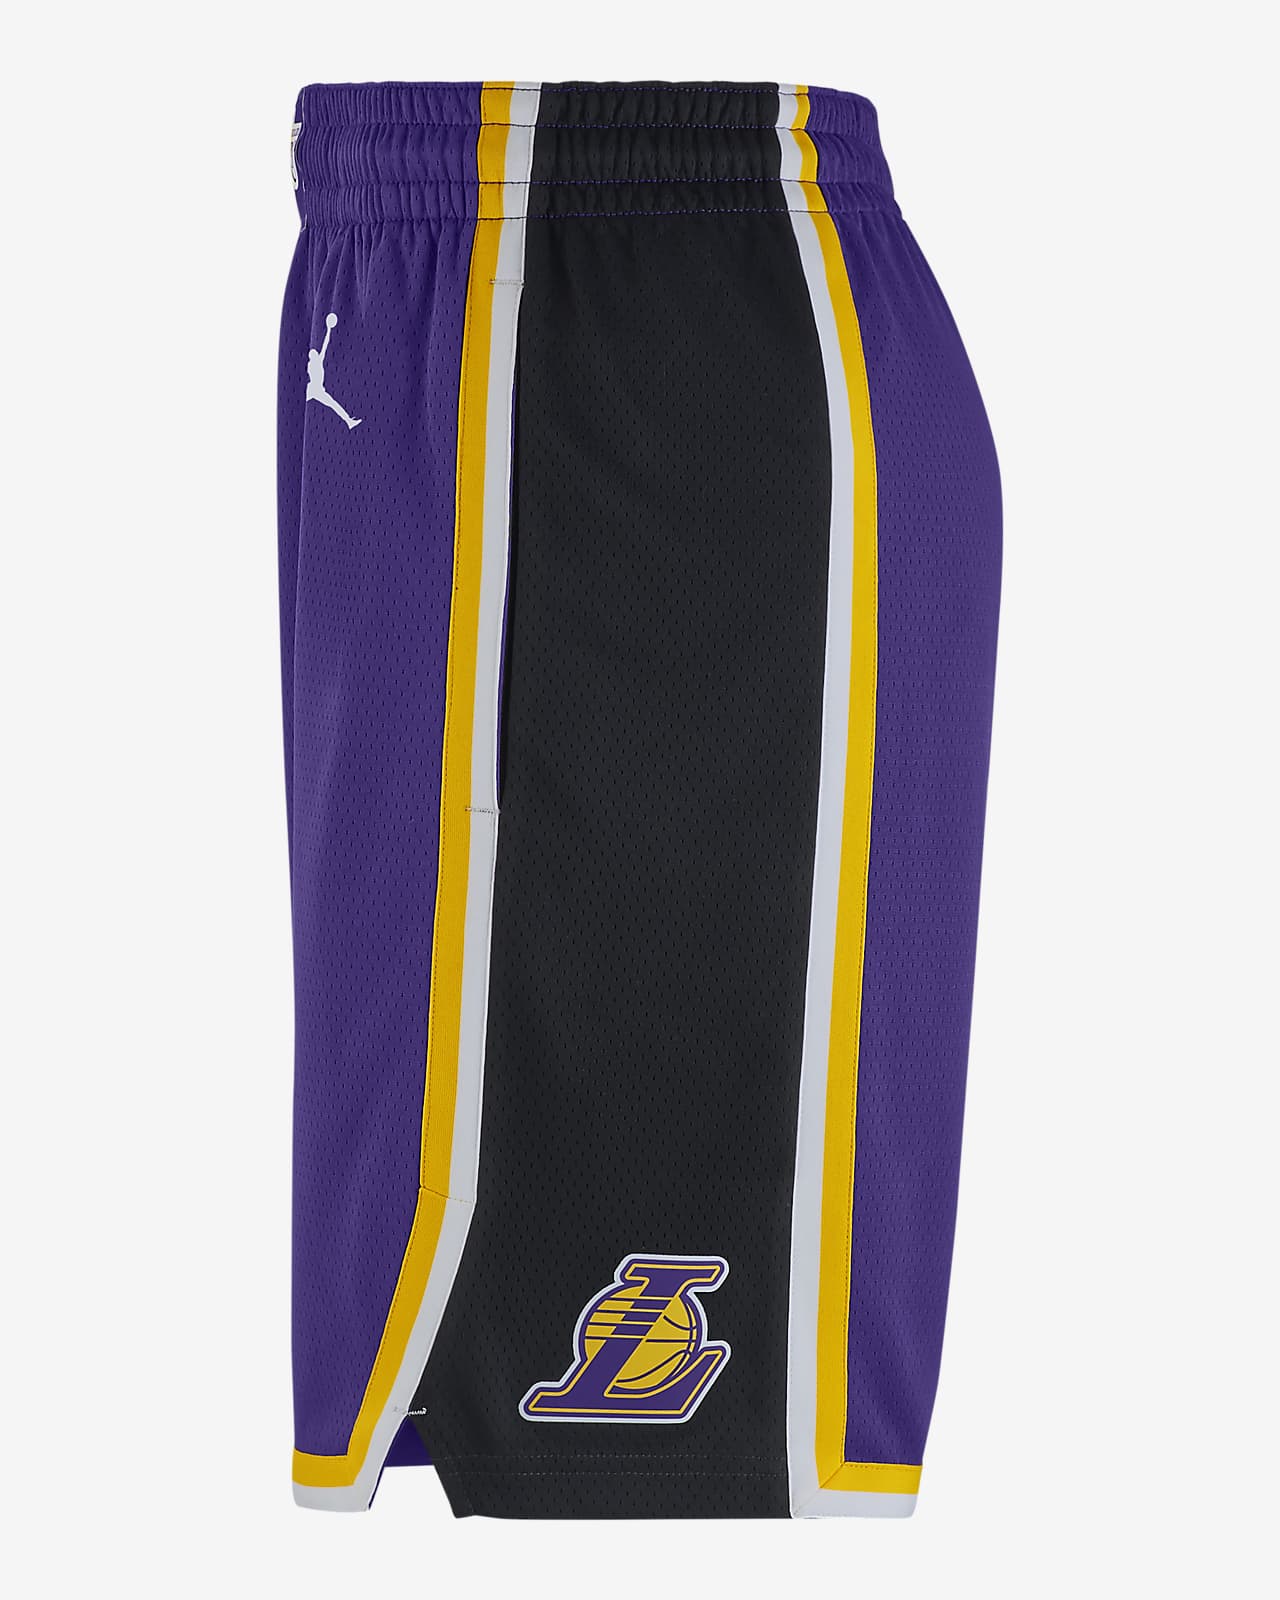 lakers city edition shorts purple